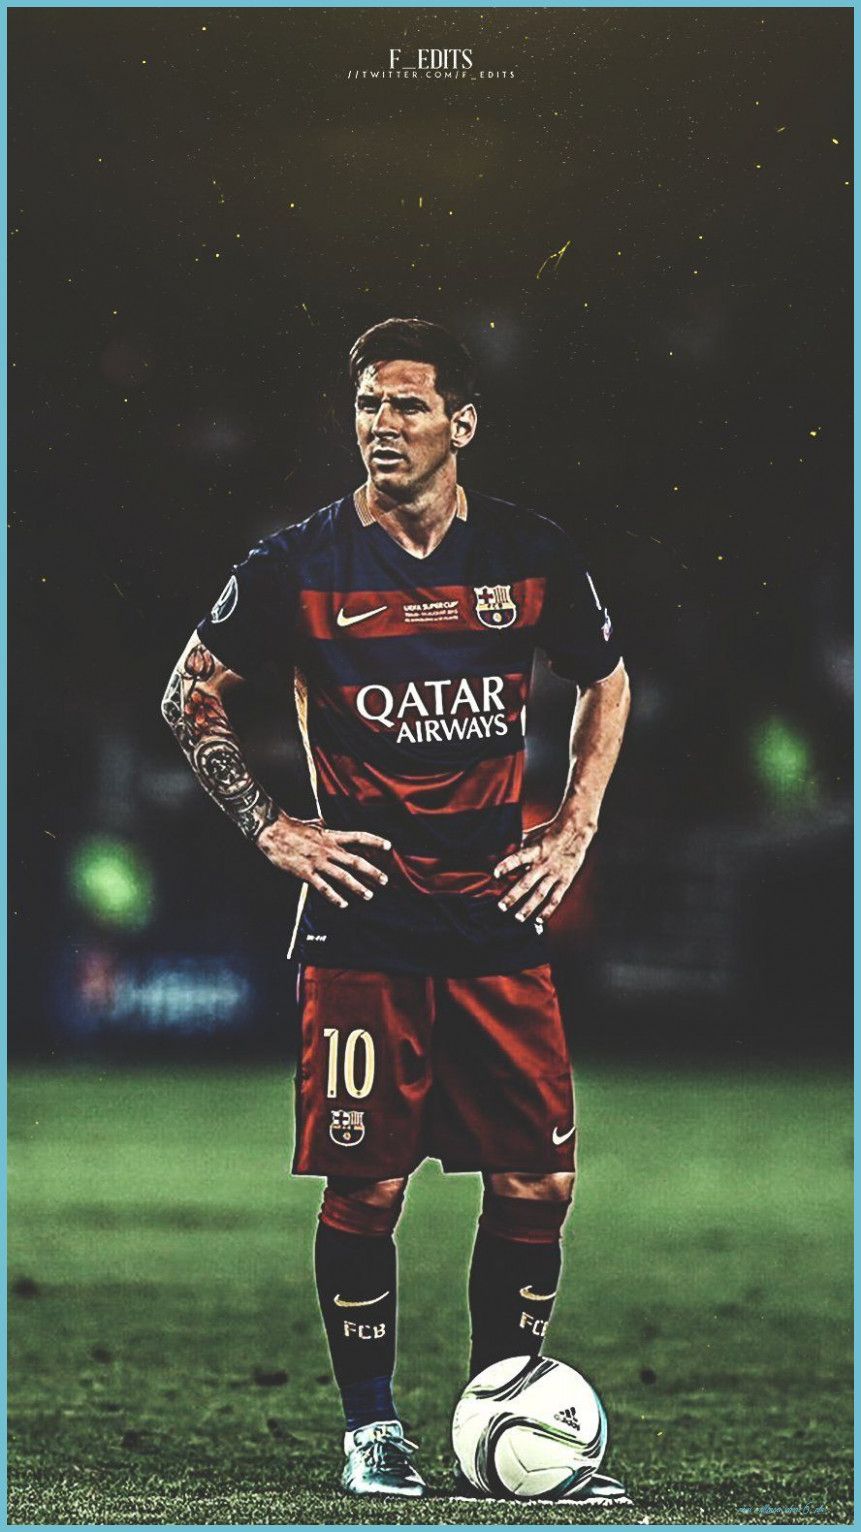 Lionel Messi IPhone Wallpaper Free Lionel Messi IPhone Wallpaper iPhone 6 Plus